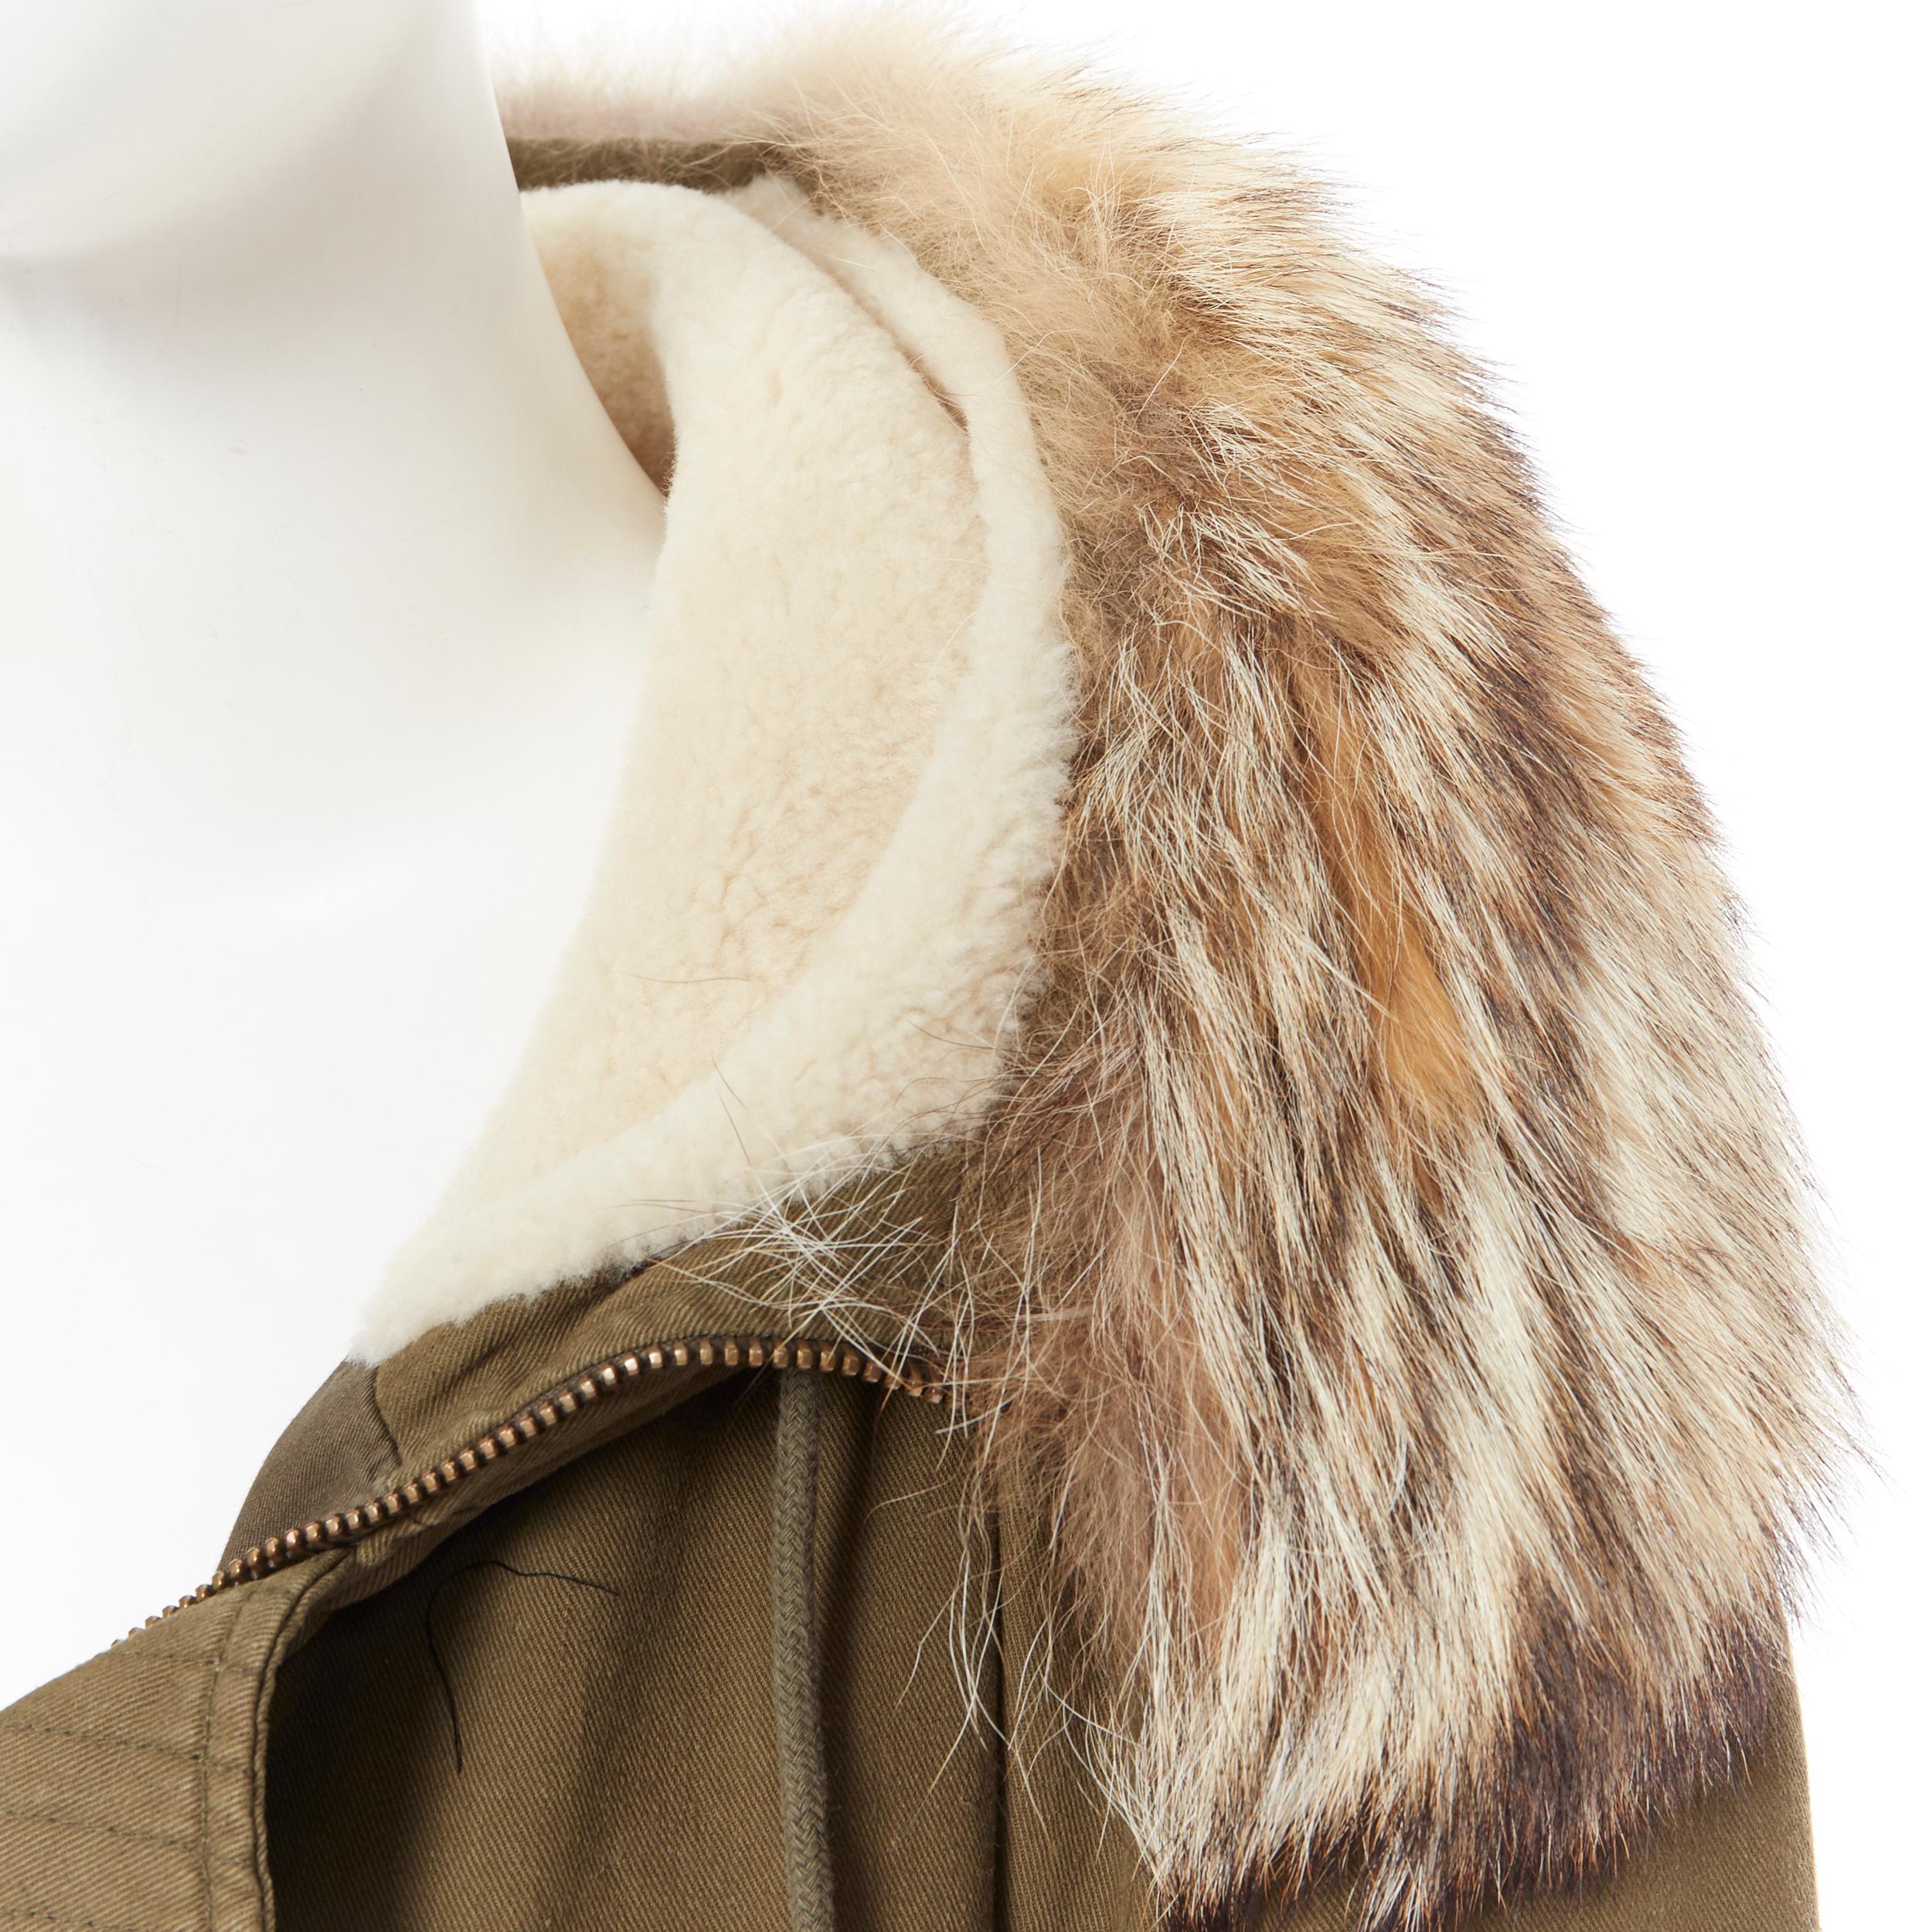 runway SAINT LAURENT AW14 coyote fur trimmed shearling hooded parka FR36
Brand: Saint Laurent
Designer: Hedi Slimane
Collection: Fall Winter 2014
Model Name / Style: Parka coat
Material: Cotton blend
Color: Green
Pattern: Solid
Closure: